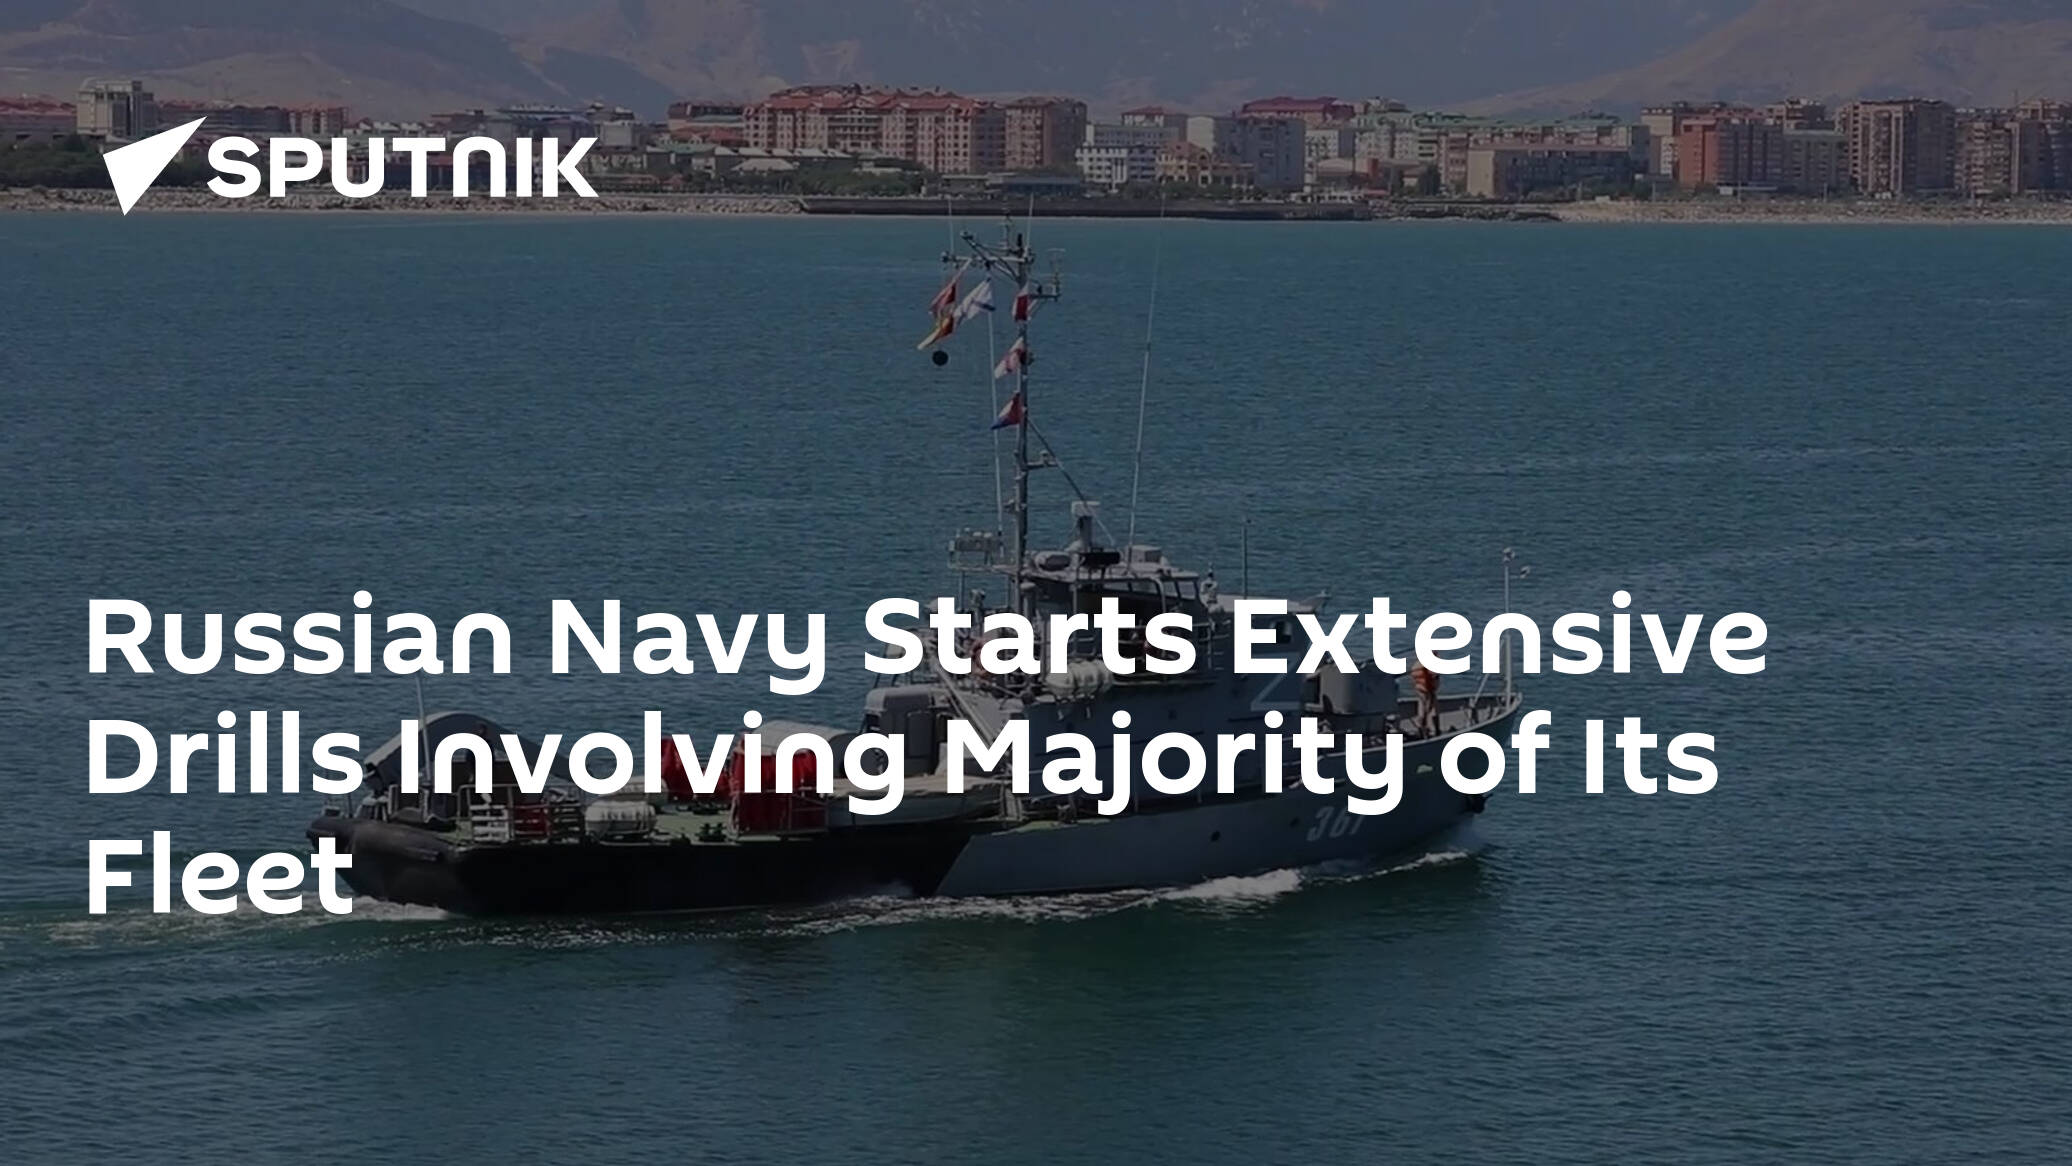 Russian Navy Starts Extensive Drills Involving Majority of Its Fleet